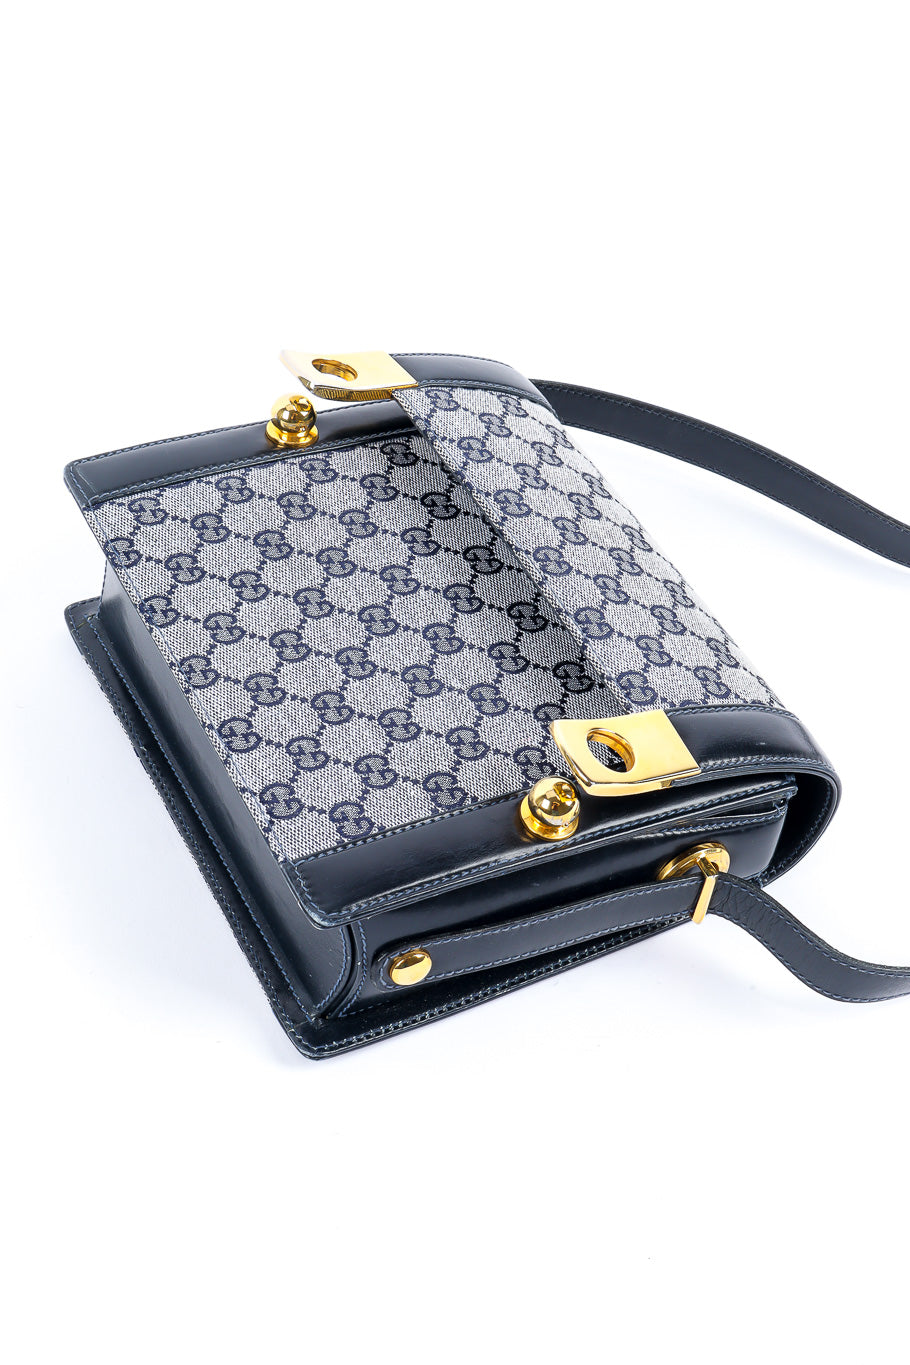 Gucci monogram shoulder bag clasp detail @recesla